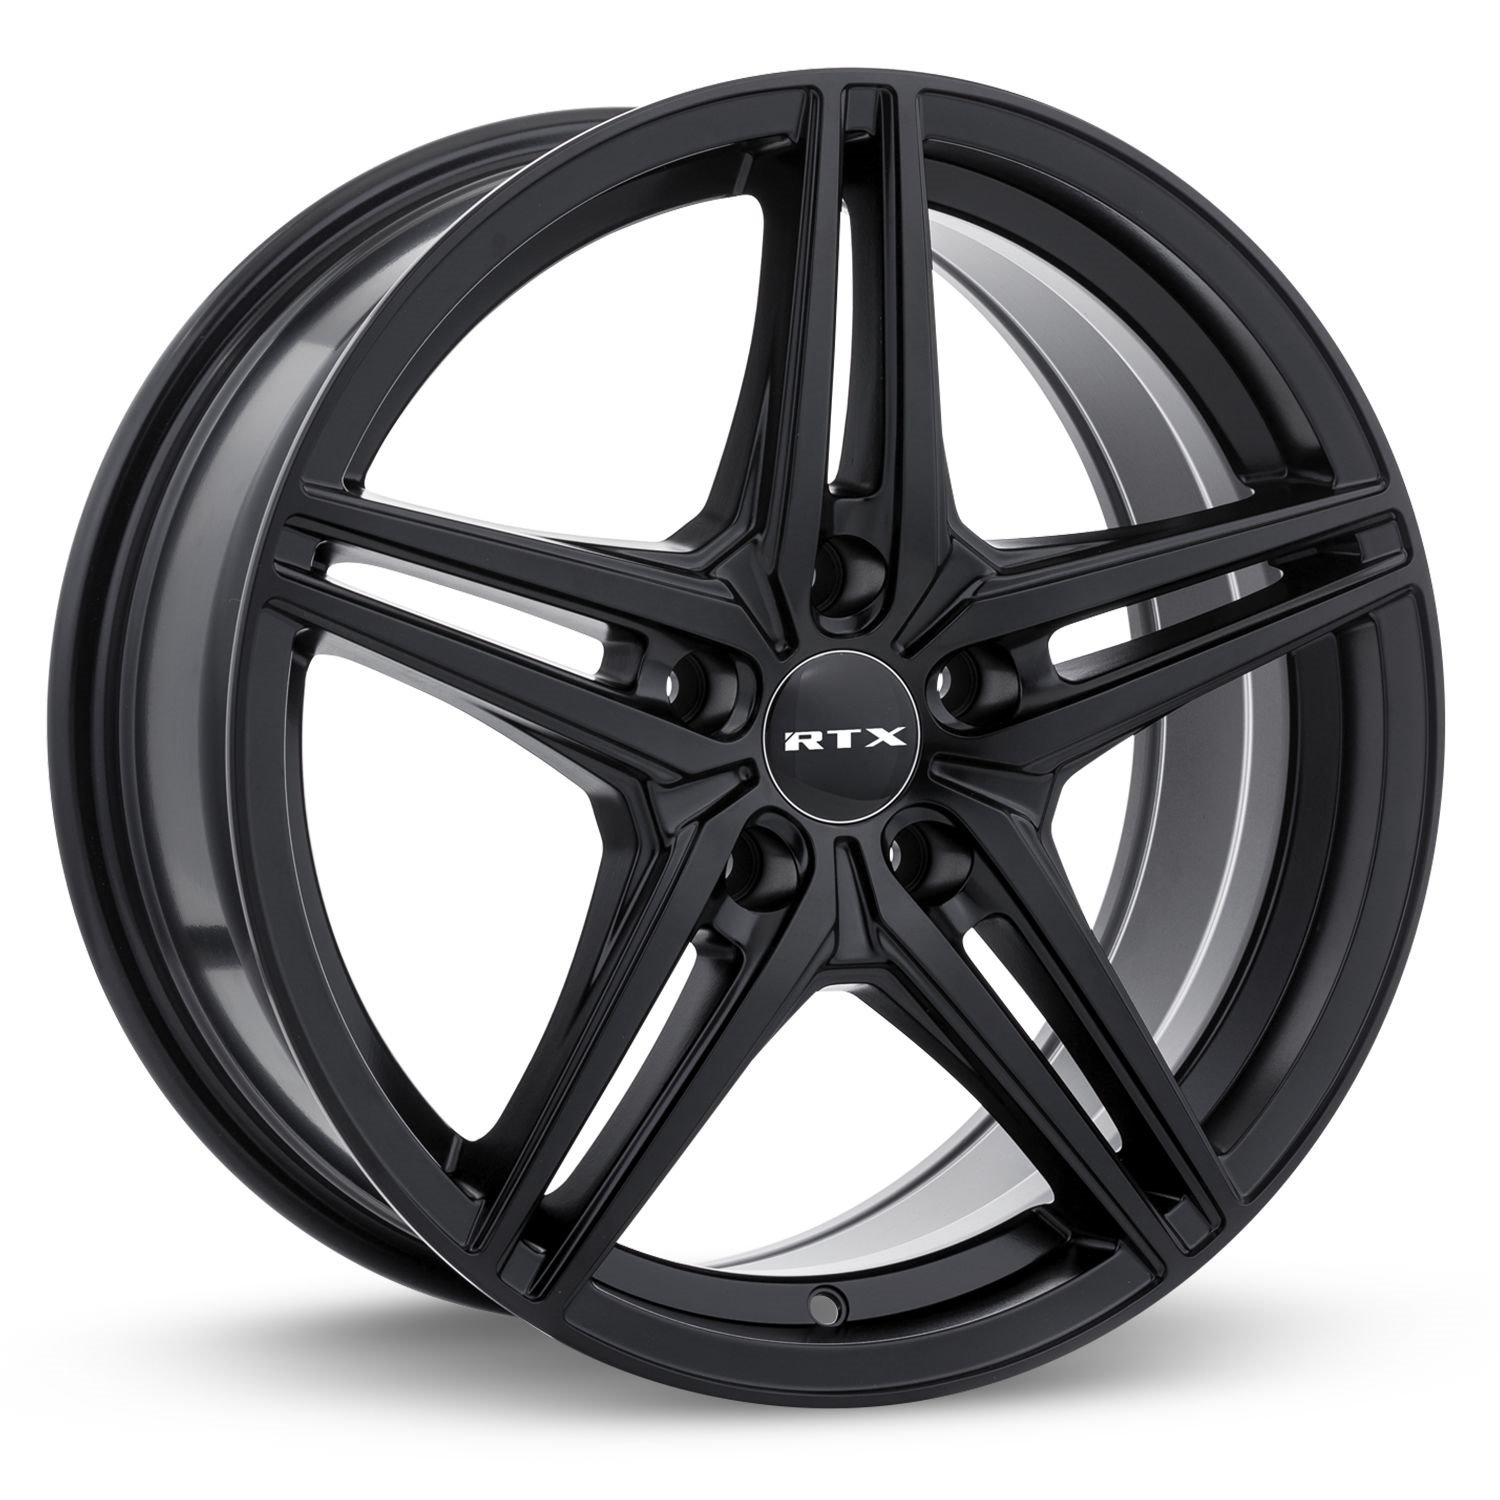 082050 RTX-Series Bern Wheel [Size: 18" x 8"] Satin Black Finish